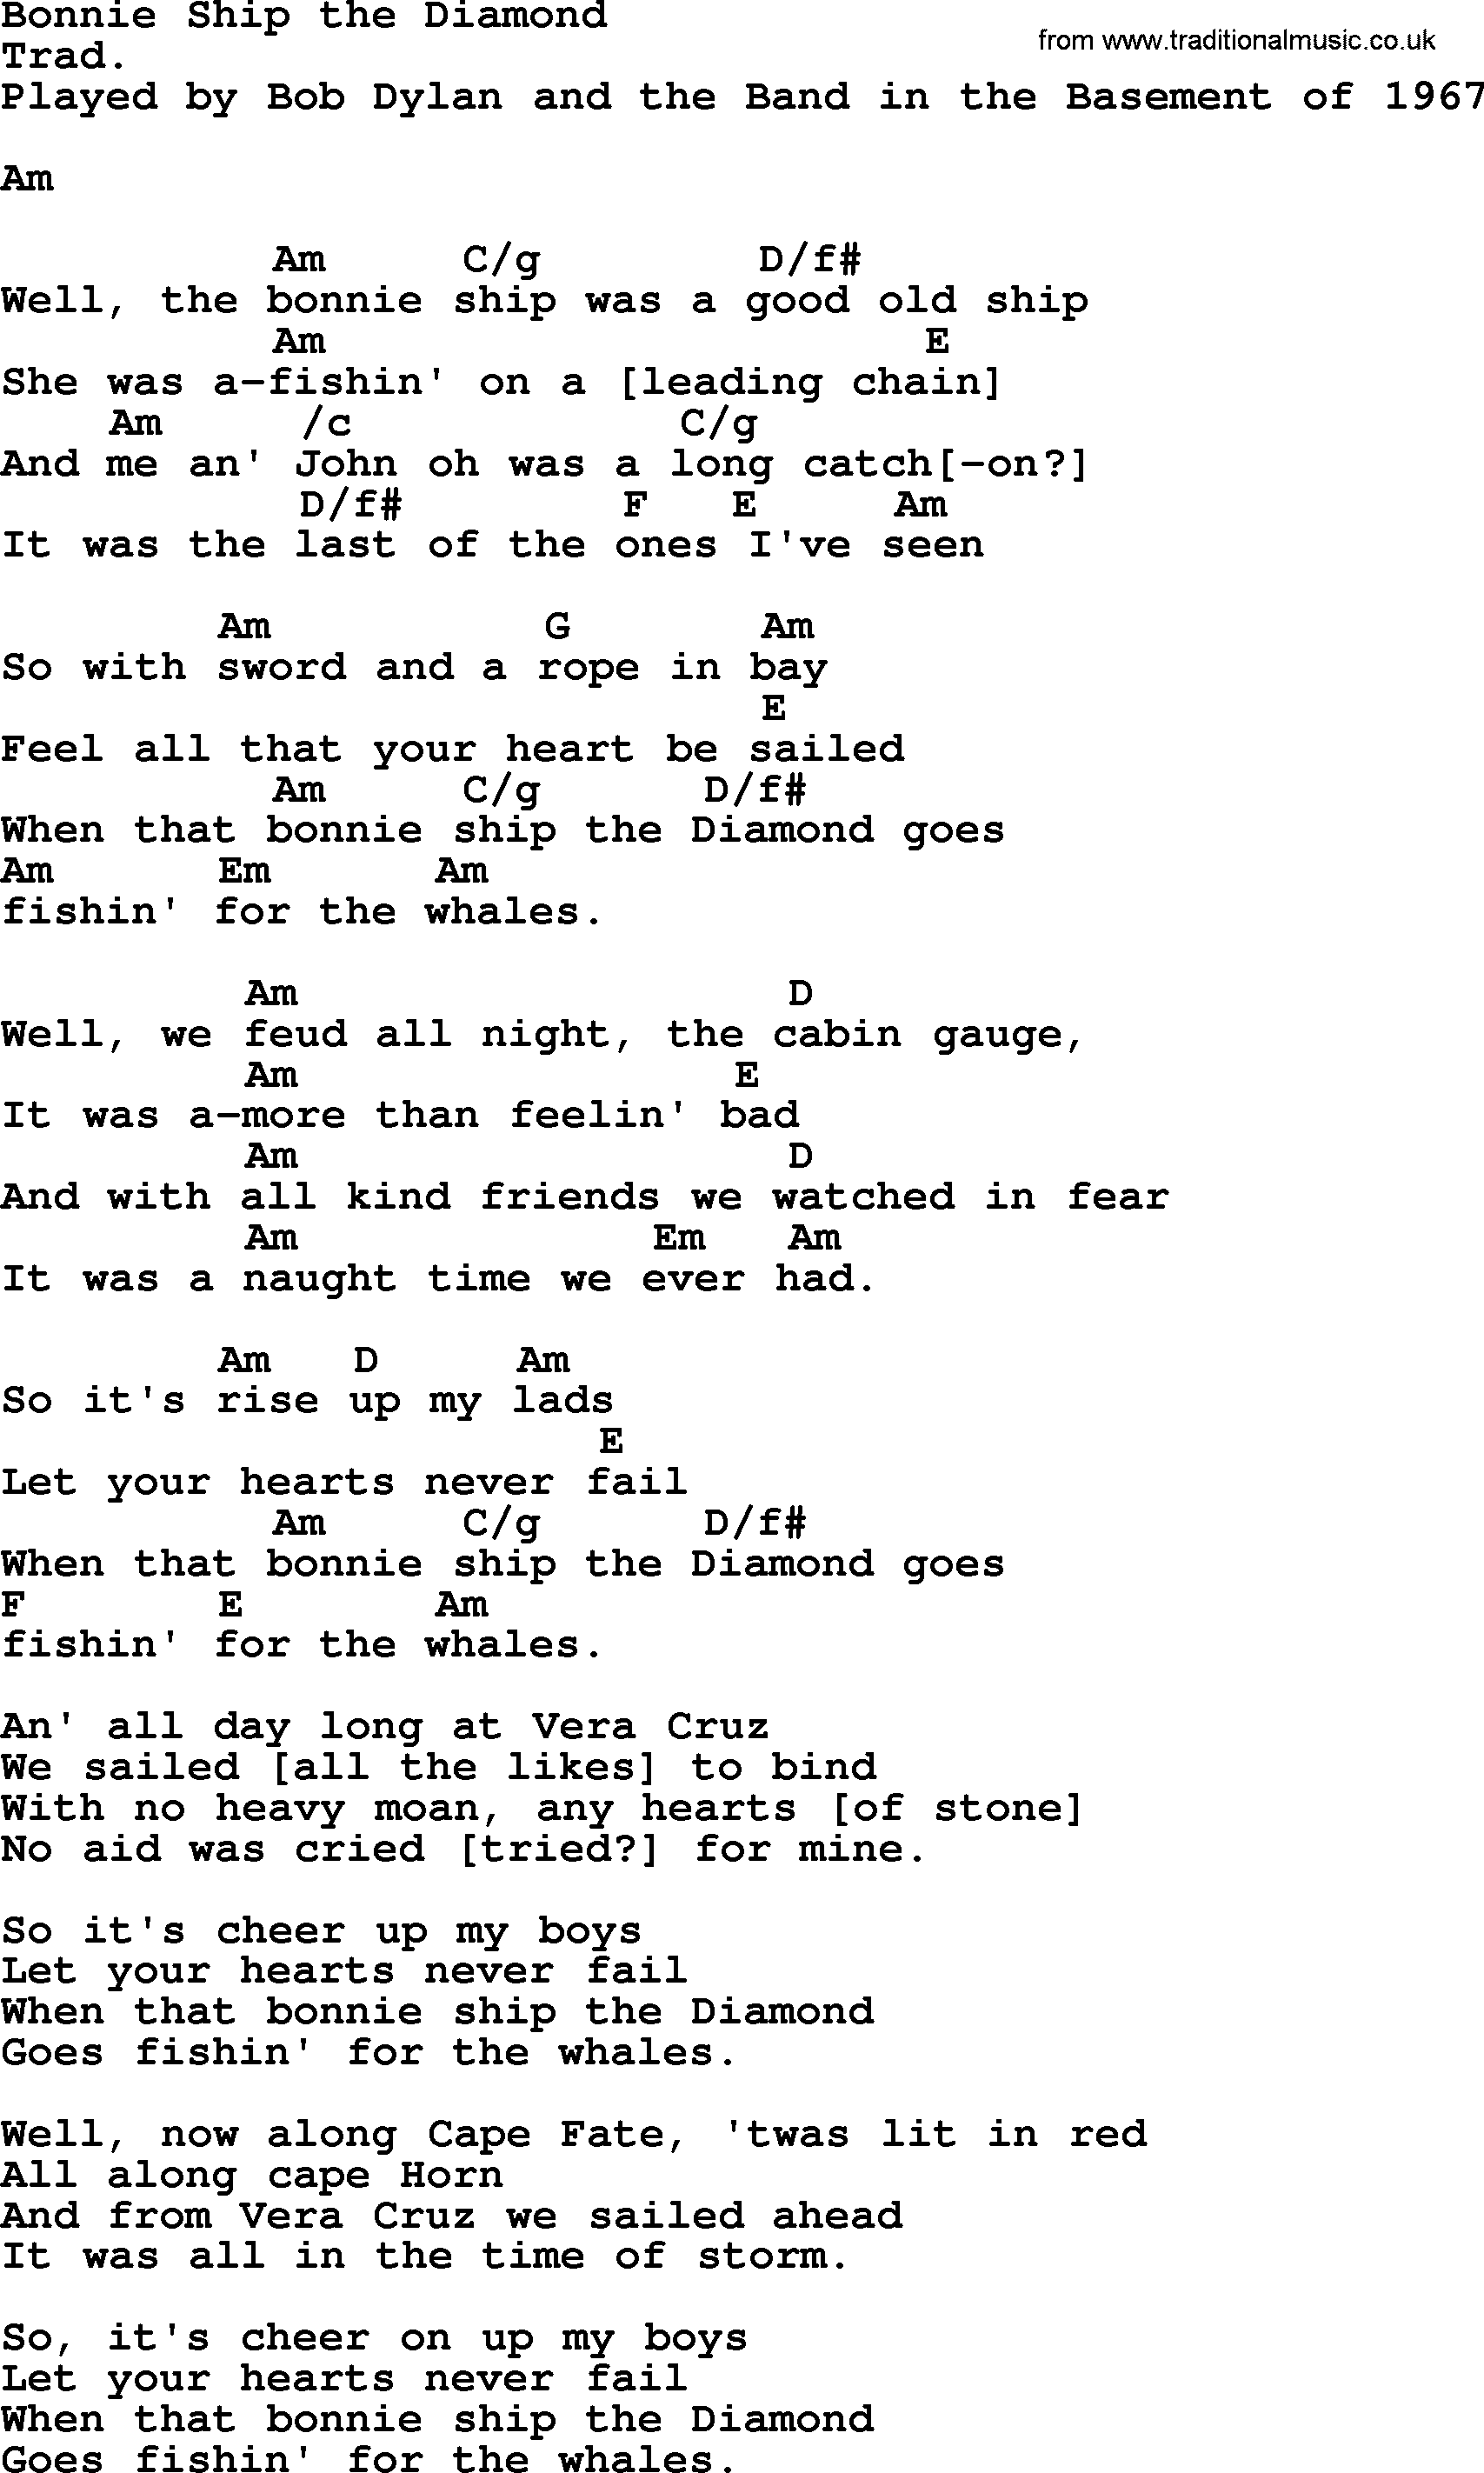 Bob Dylan song, lyrics with chords - Bonnie Ship the Diamond